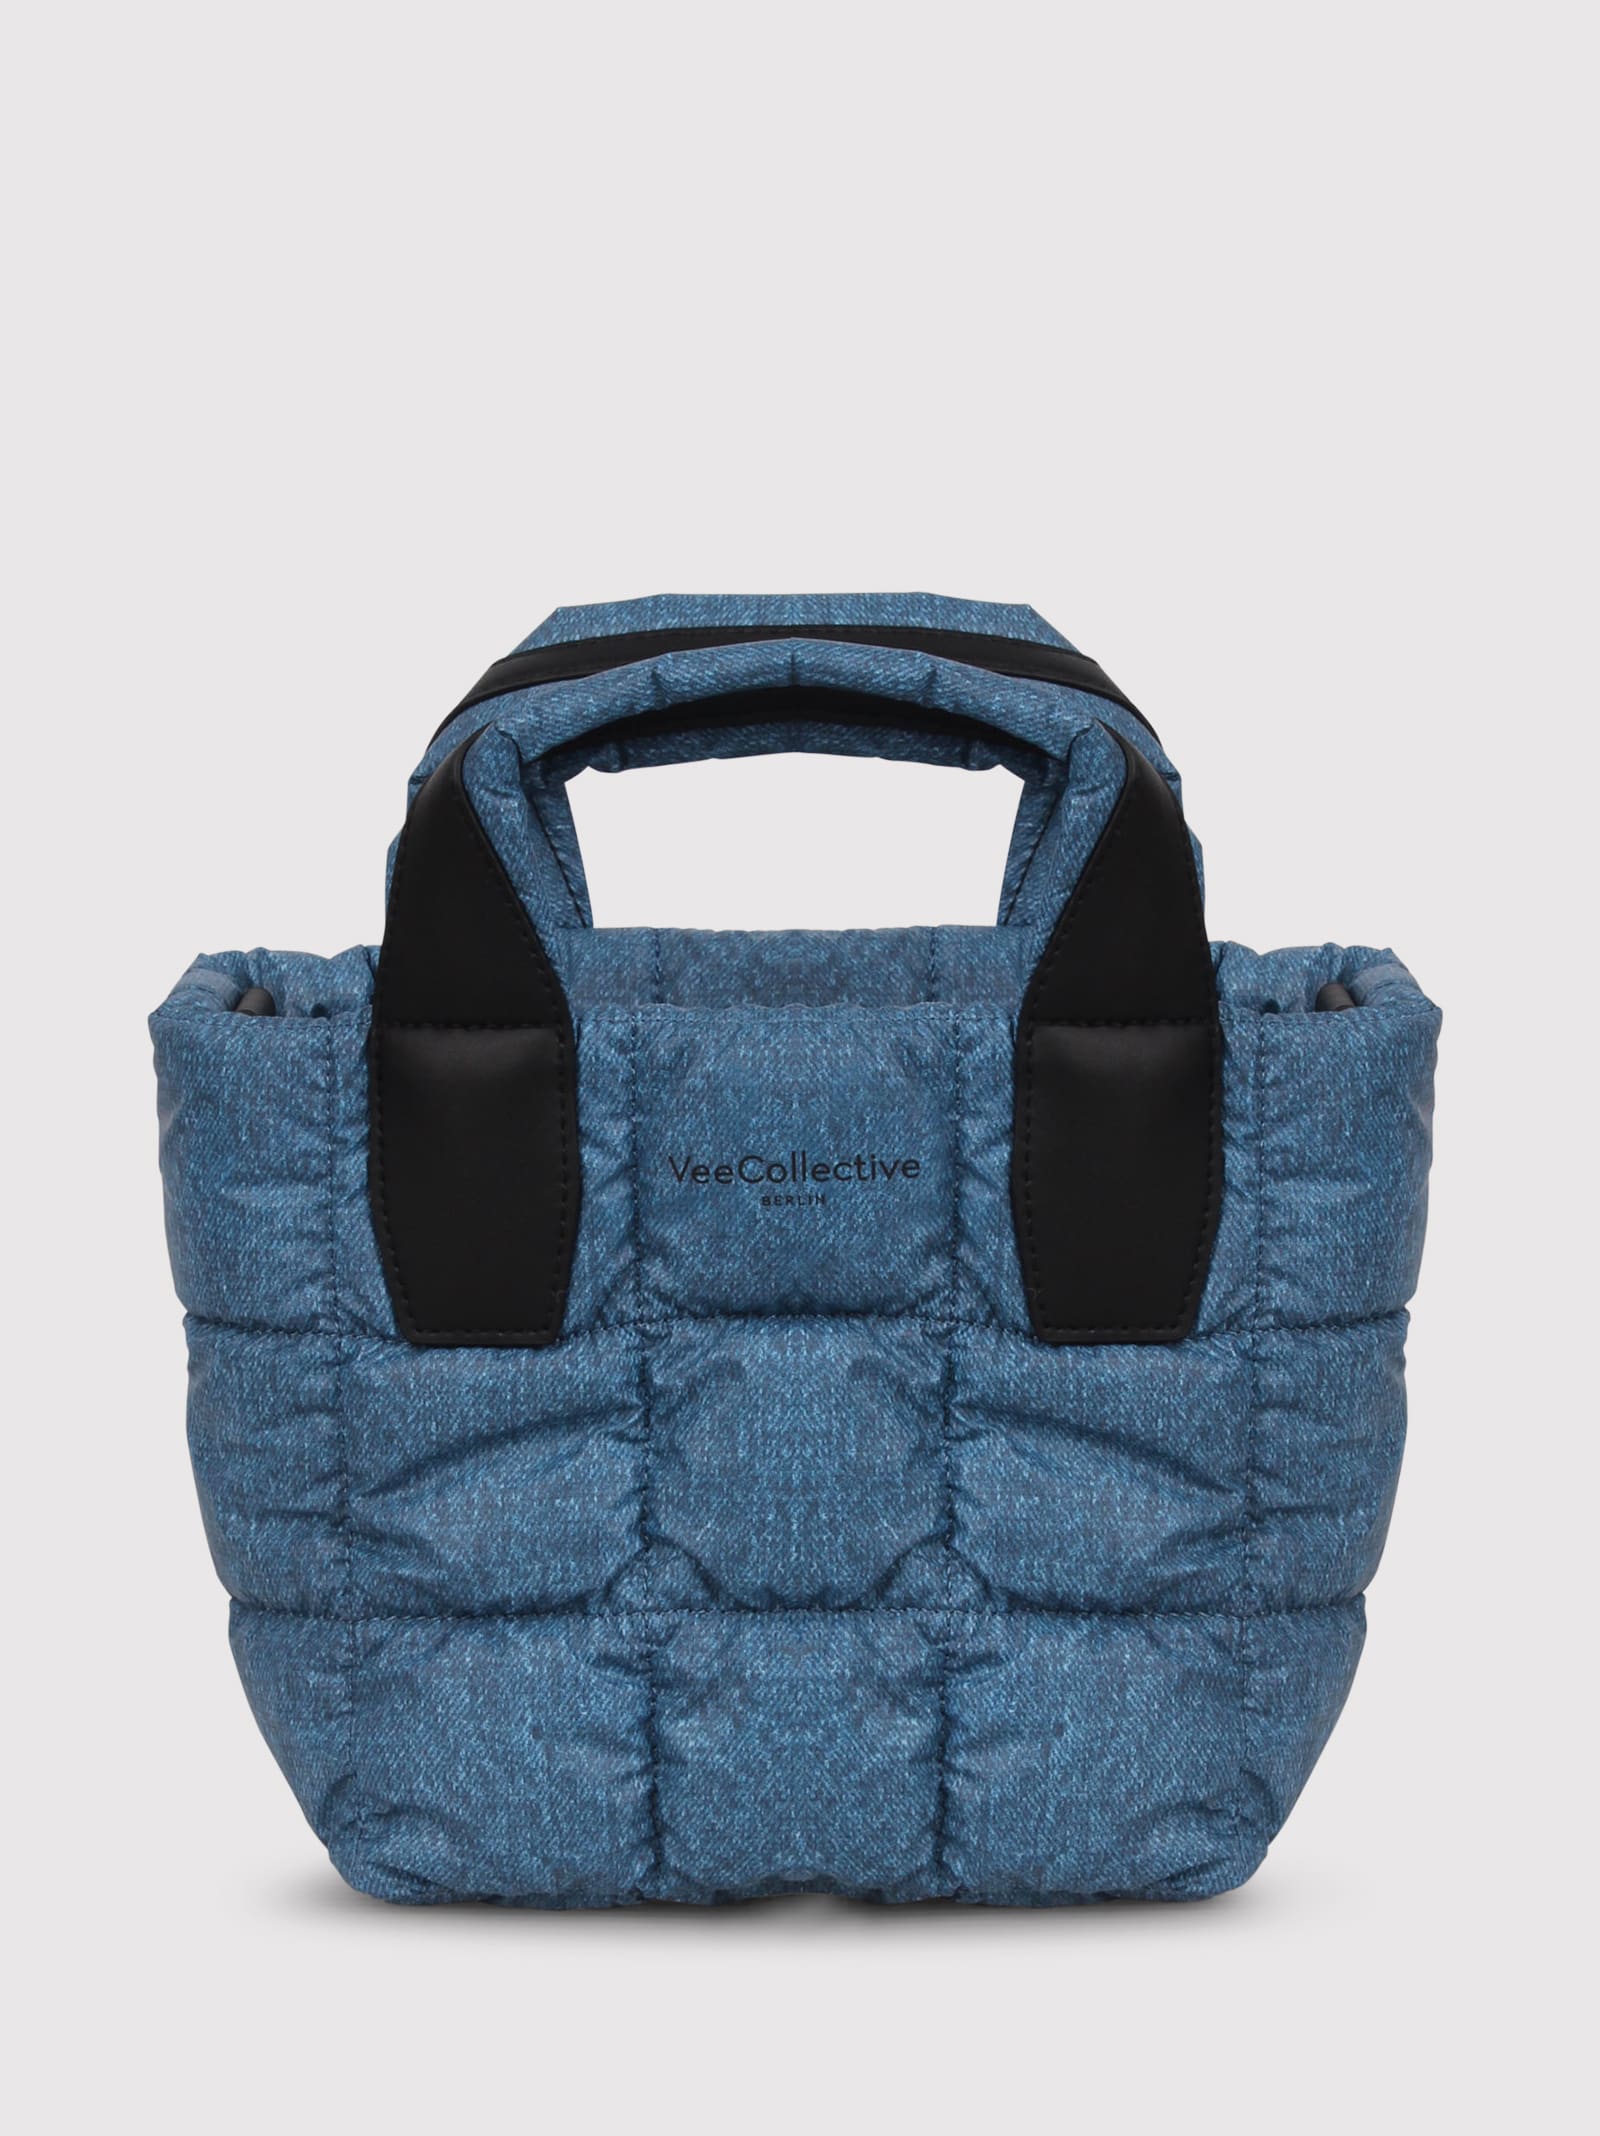 Veecollective Vee Collective Mini Porter Handbag In Blue